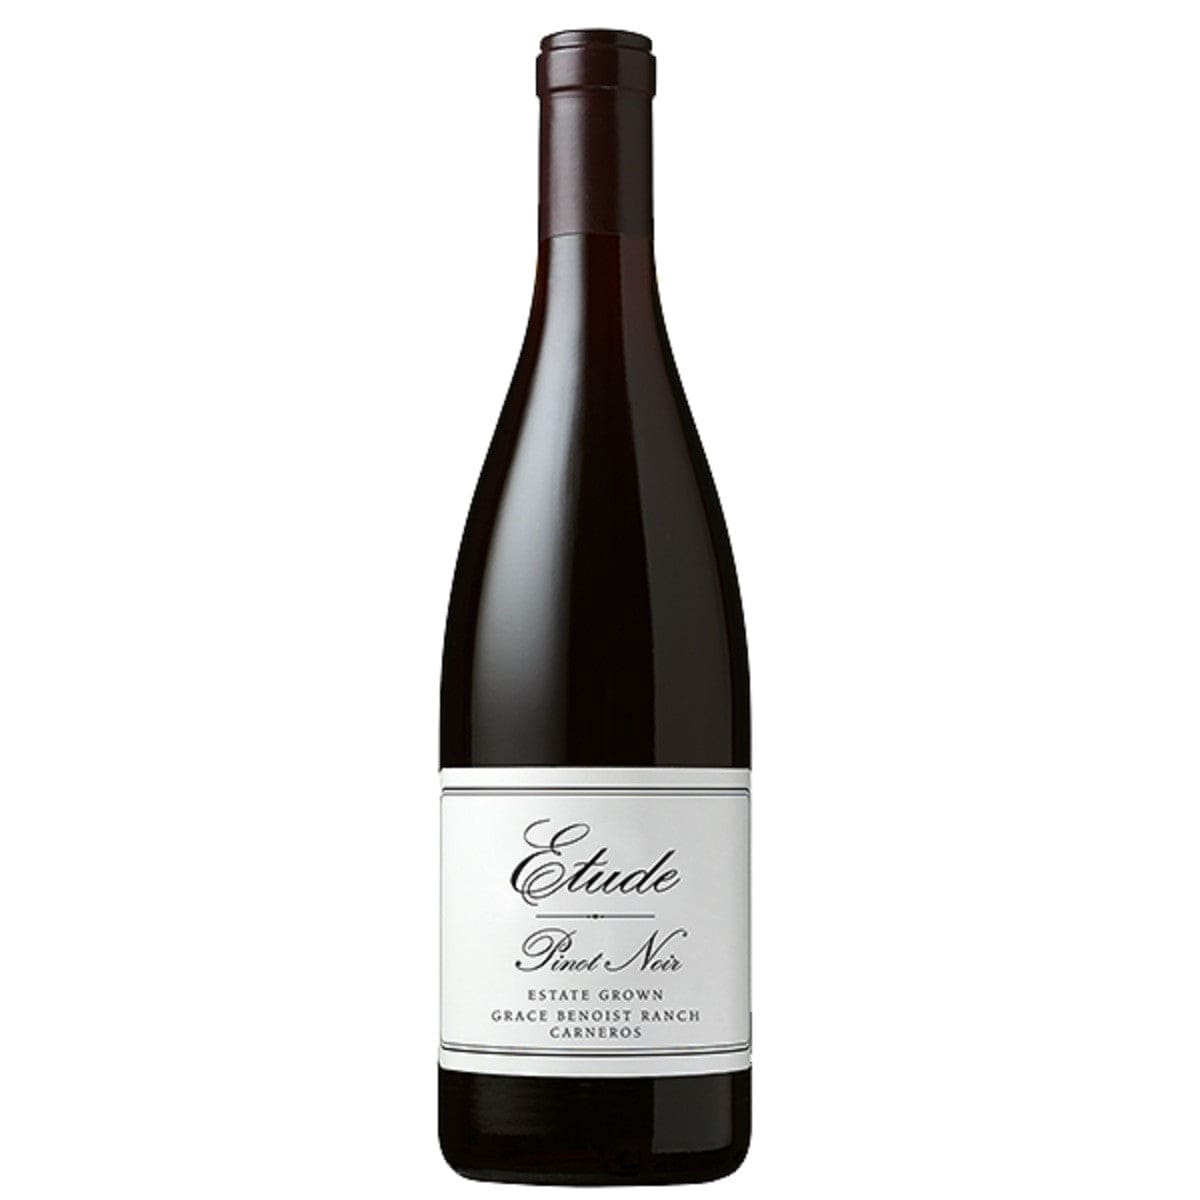 Wine Etude Grace Benoist Ranch Pinot Noir